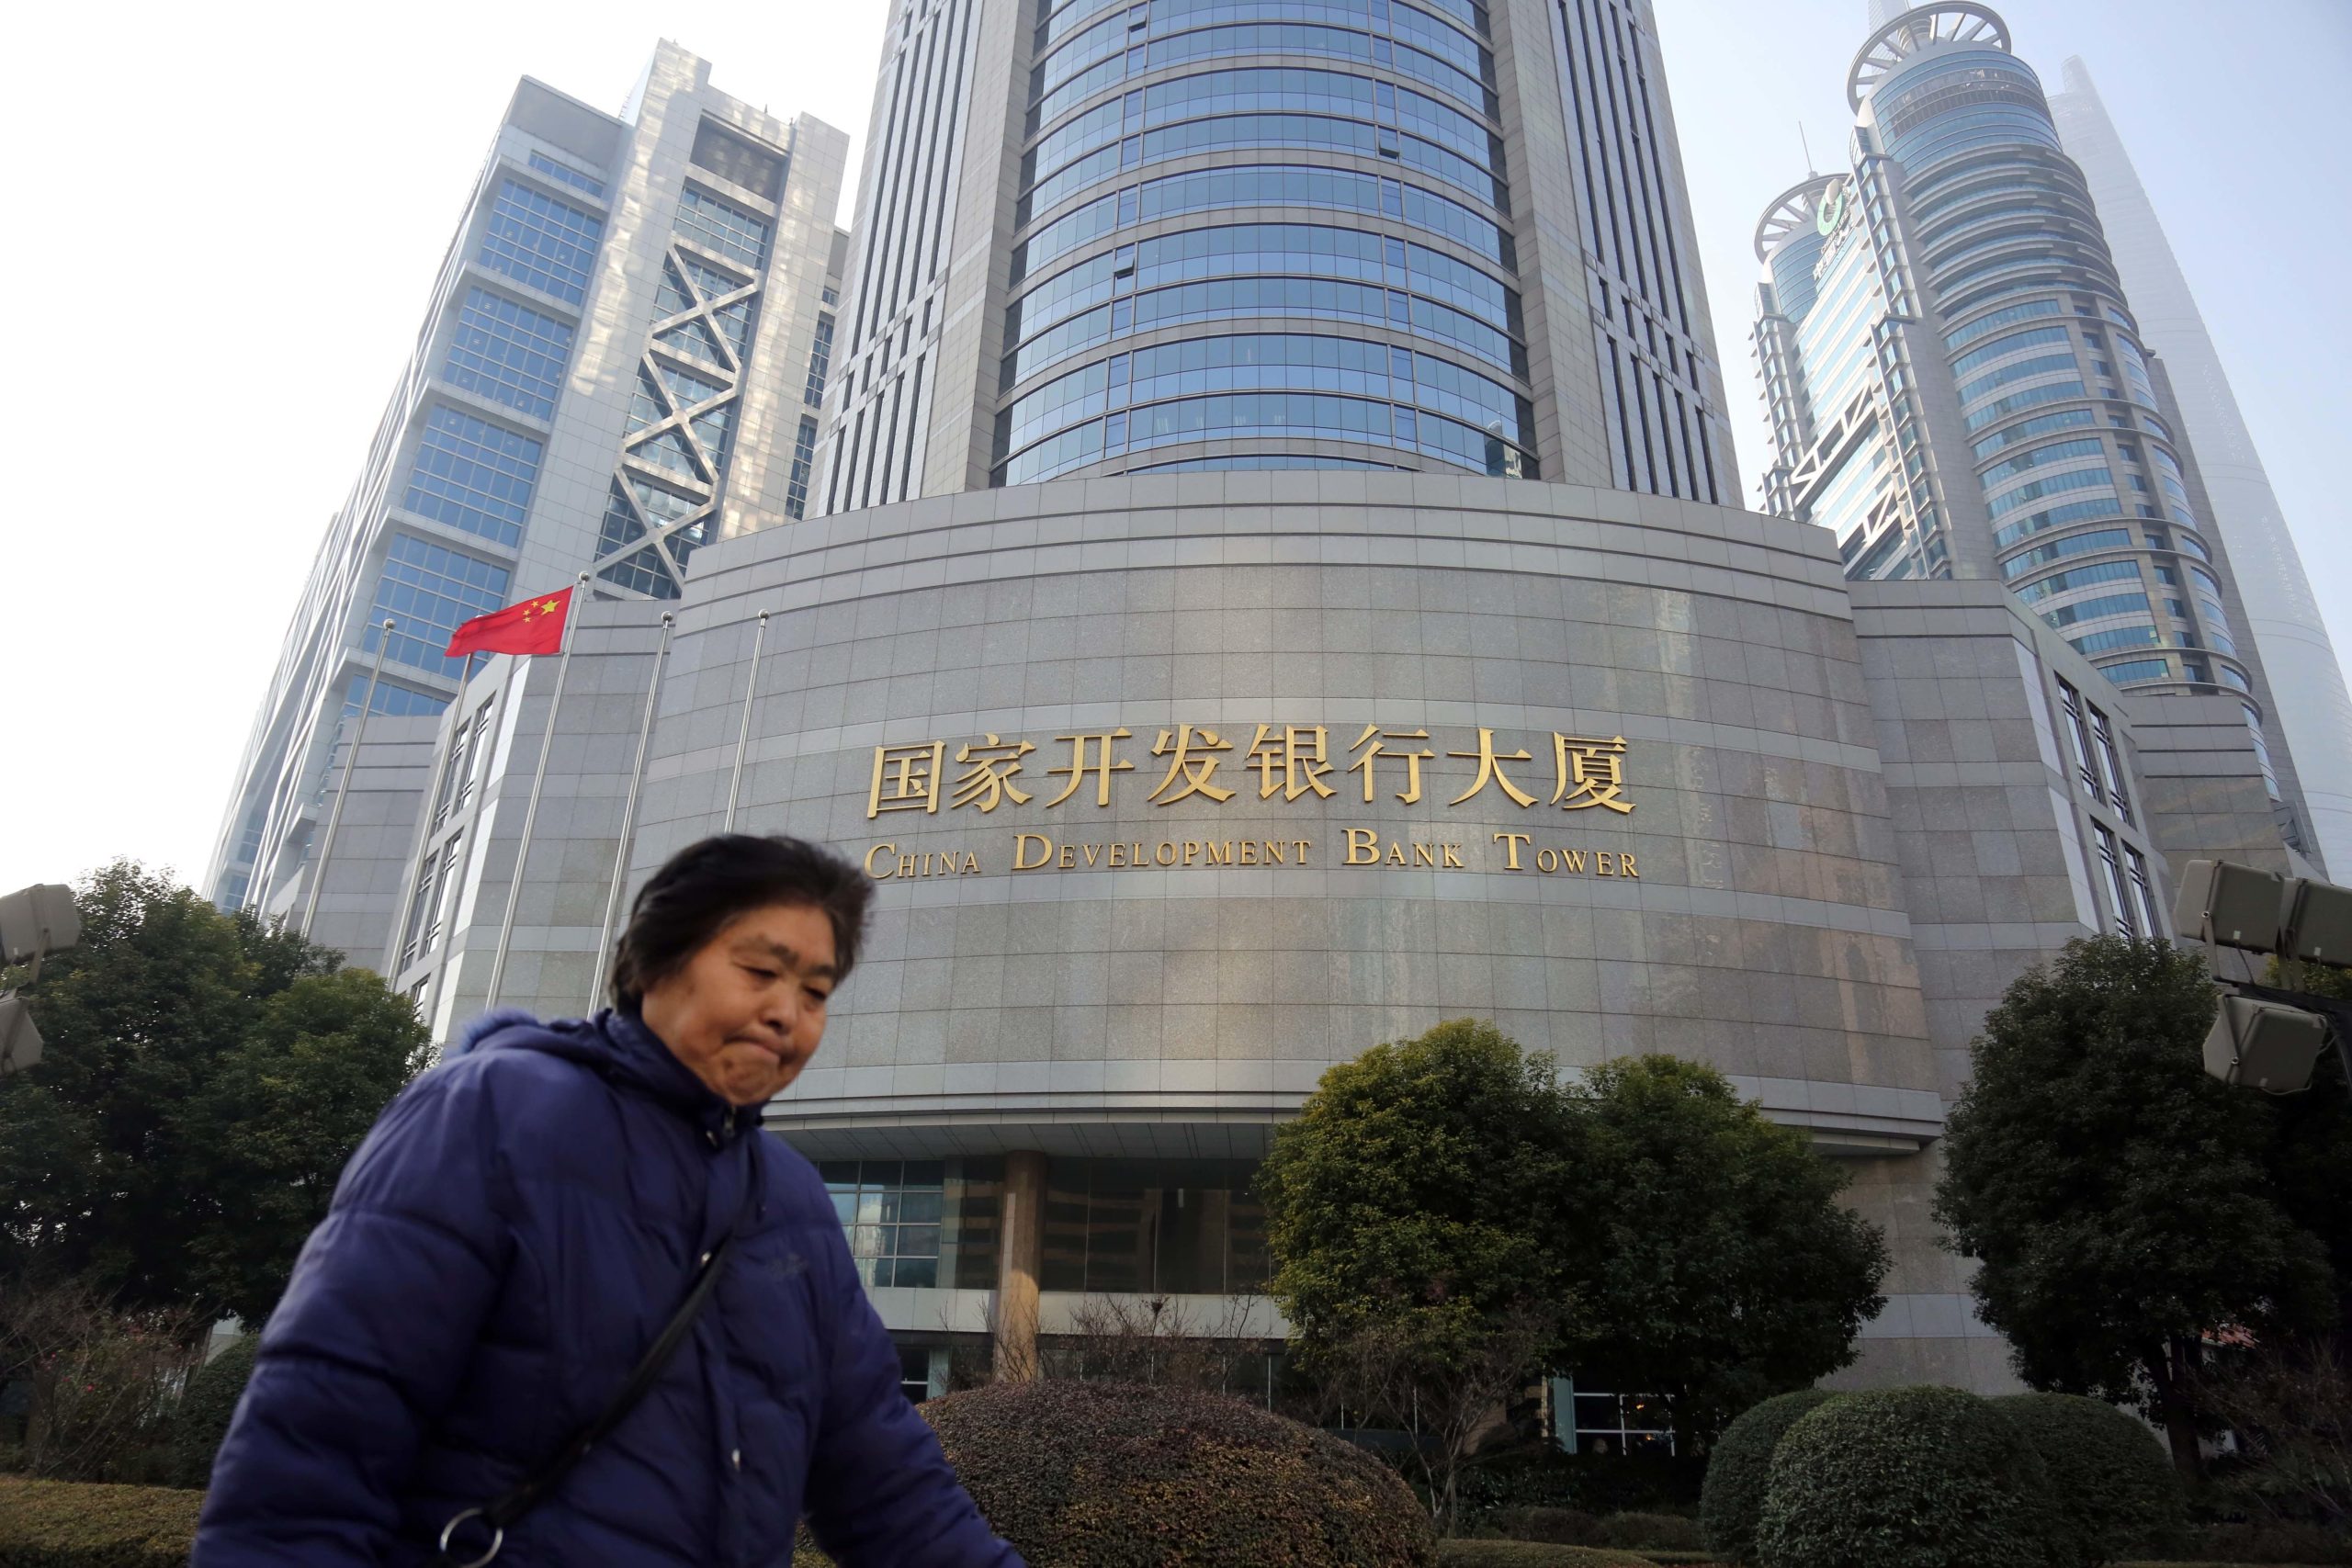 mujer camina frente al edificio del banco chino de desarrollo